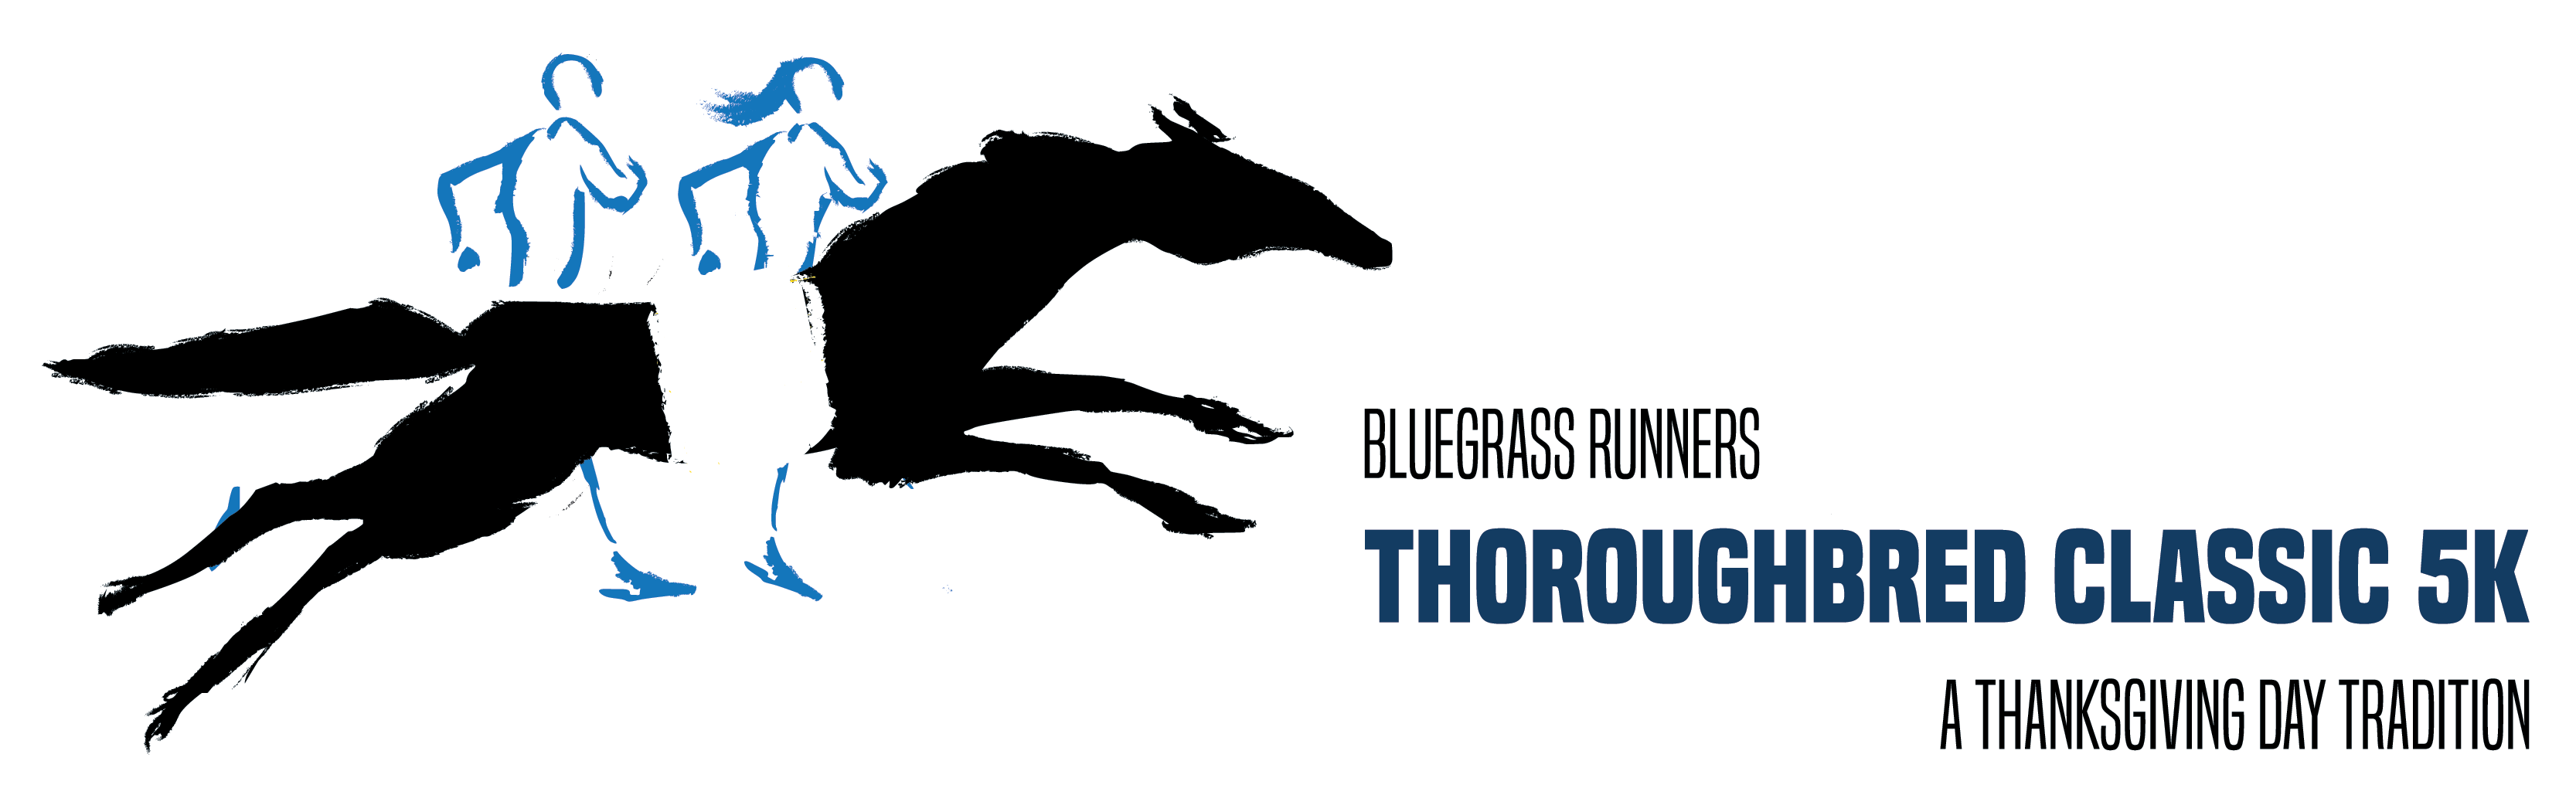 Bluegrass Runners Thoroughbred Classic 5K